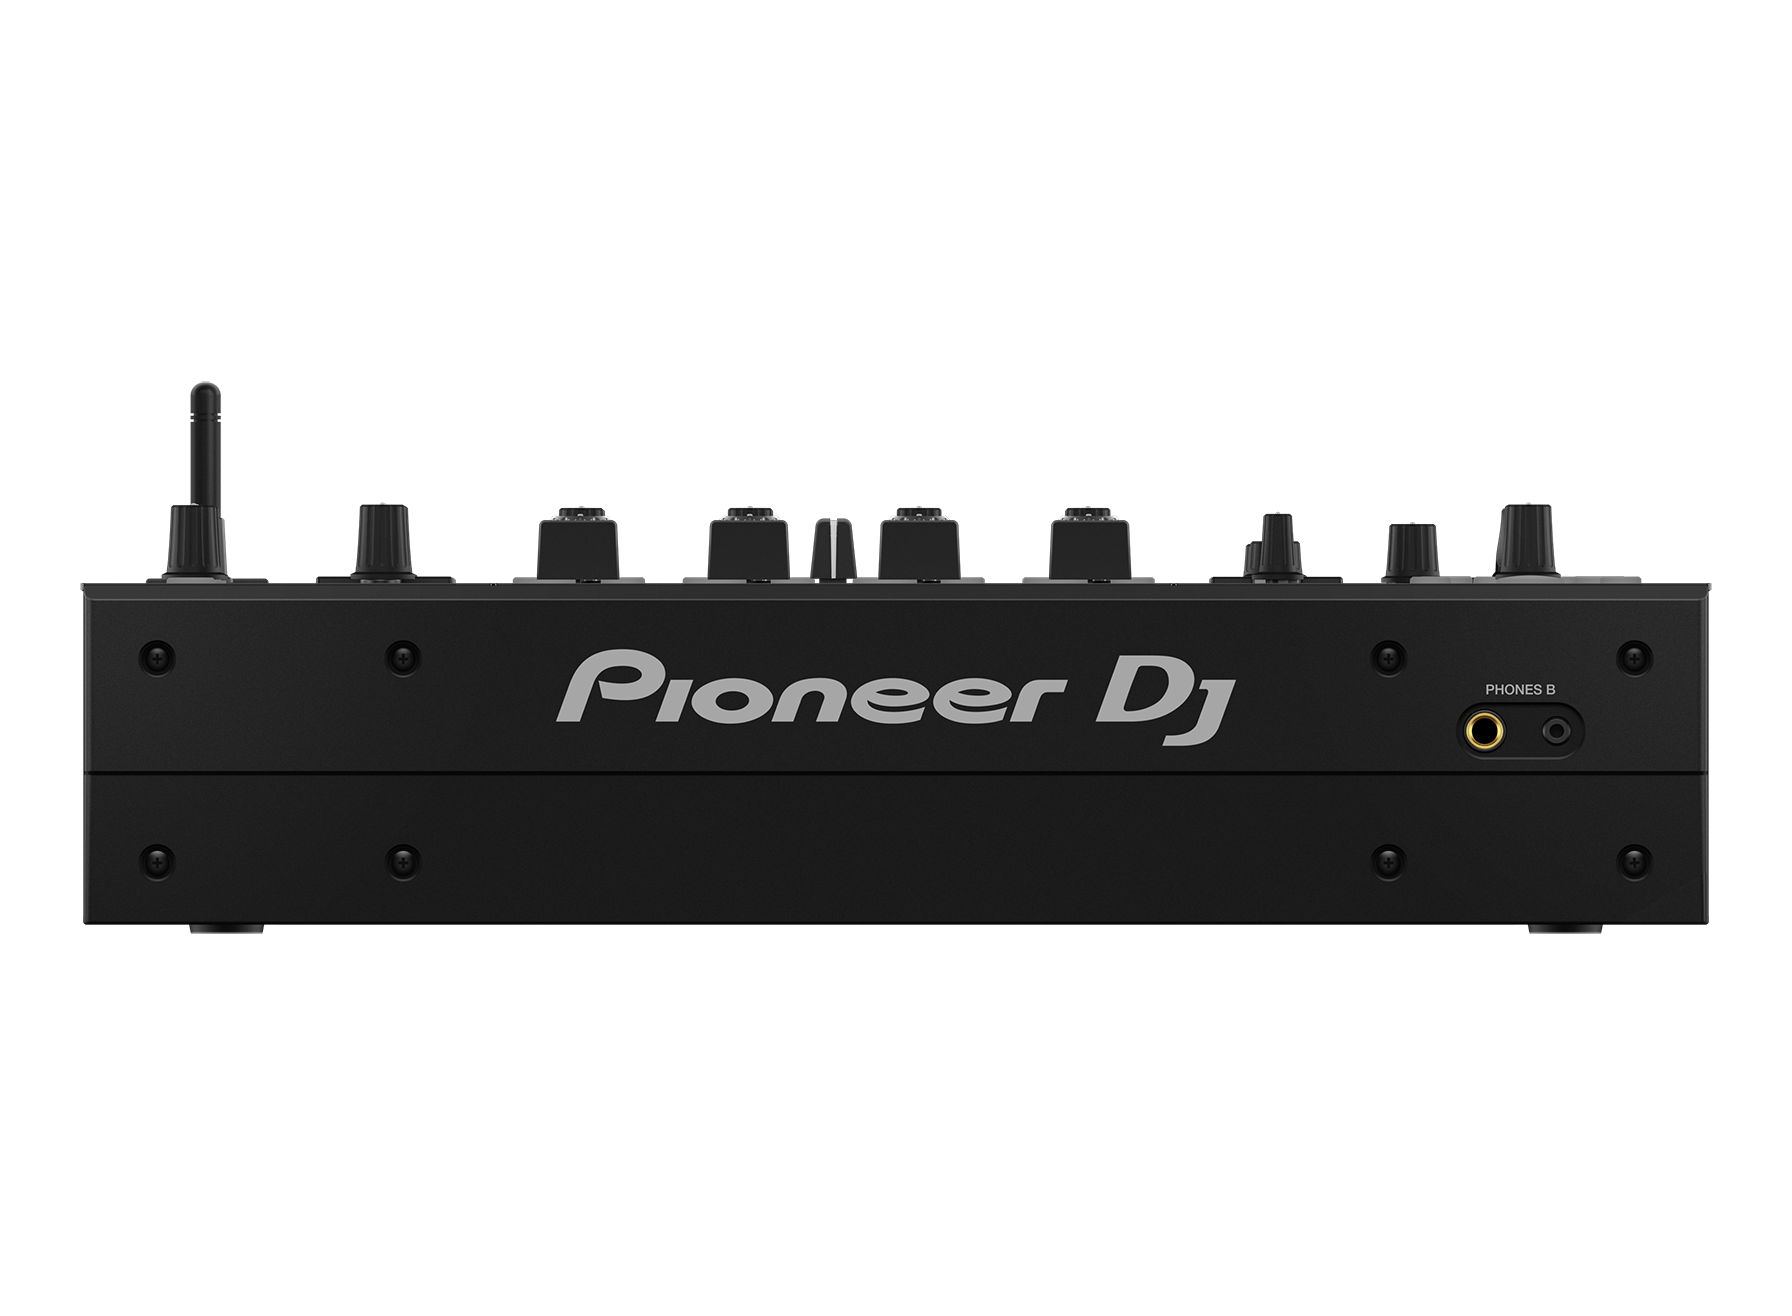 Pioneer DJM-A9 по цене 427 405.00 ₽